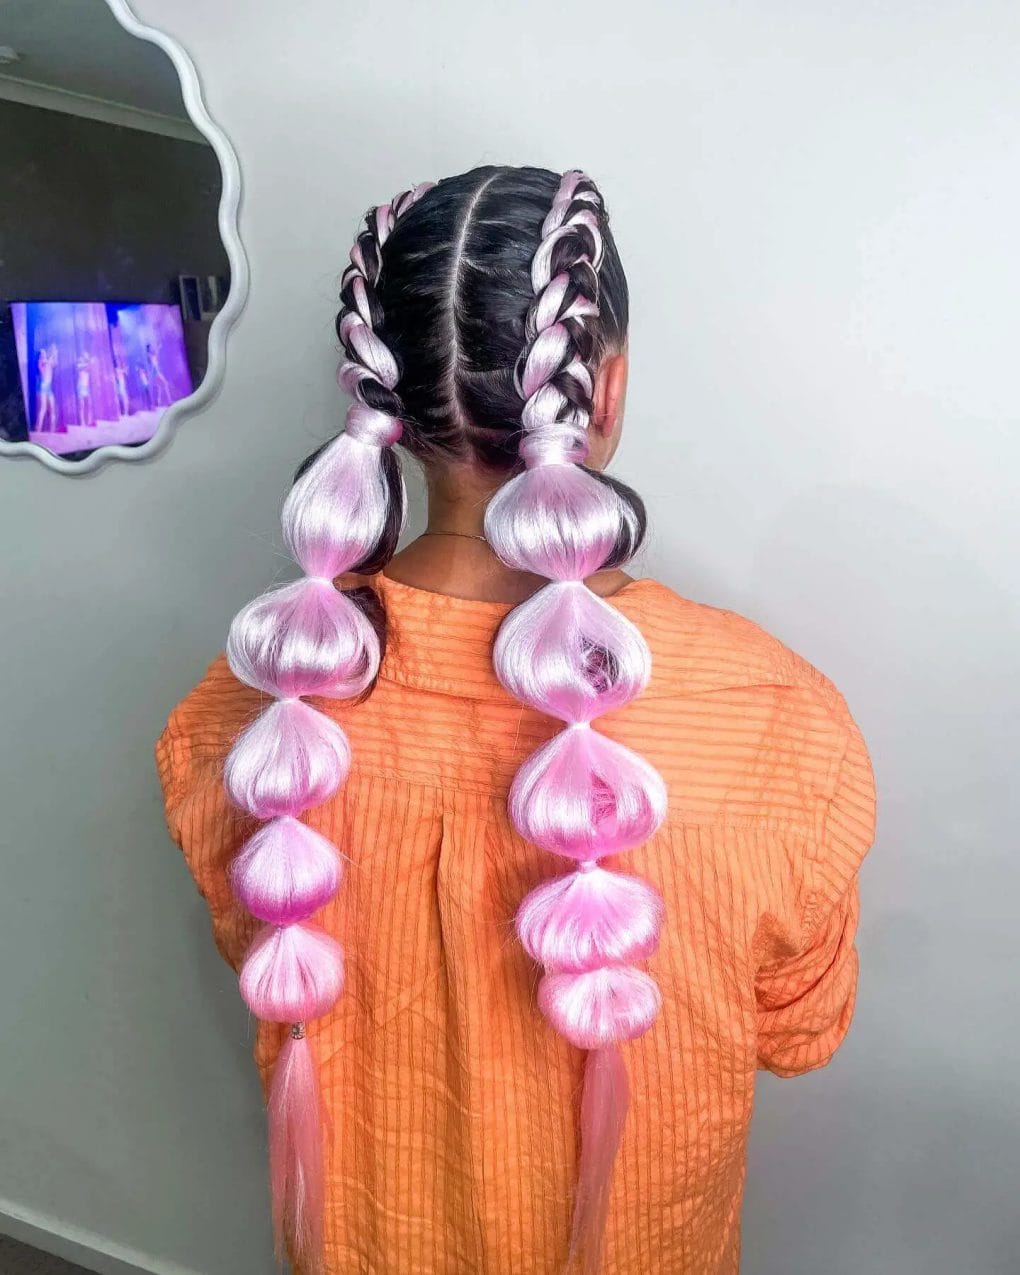 Pastel purple to pink double Dutch braids with bubble ponytails